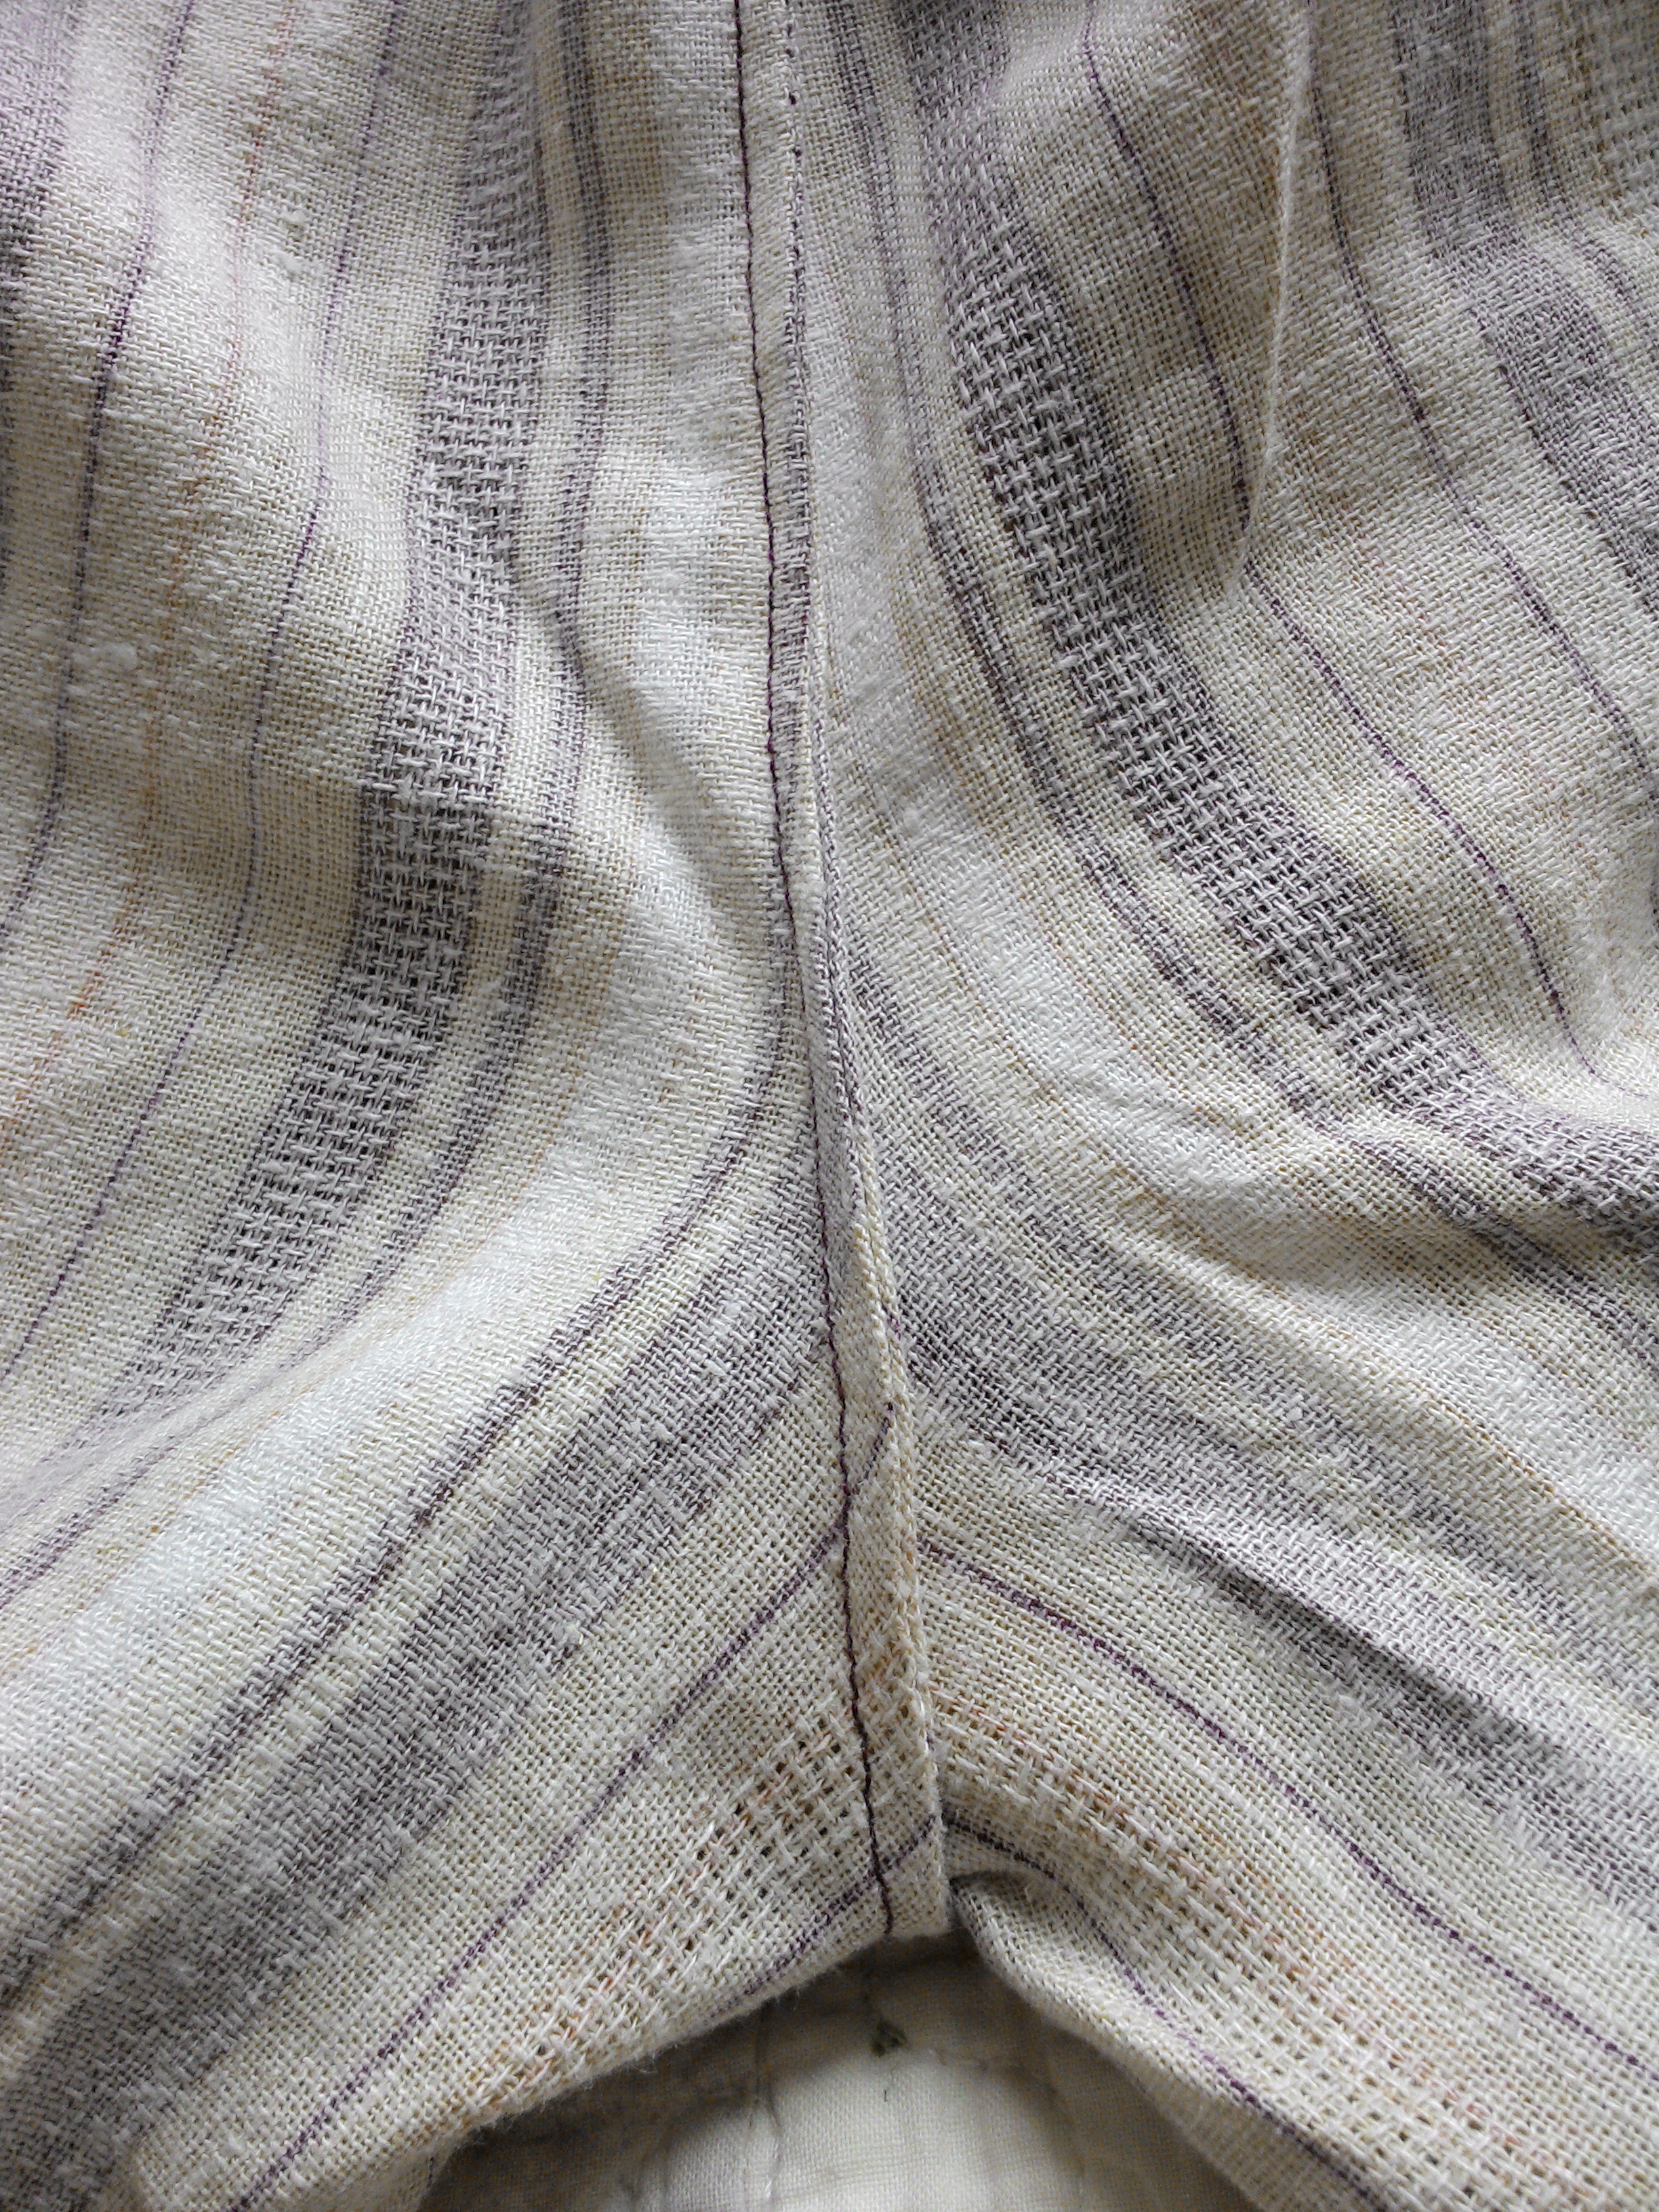 Burda 9645 Sewing Pattern Review - saturday night stitch